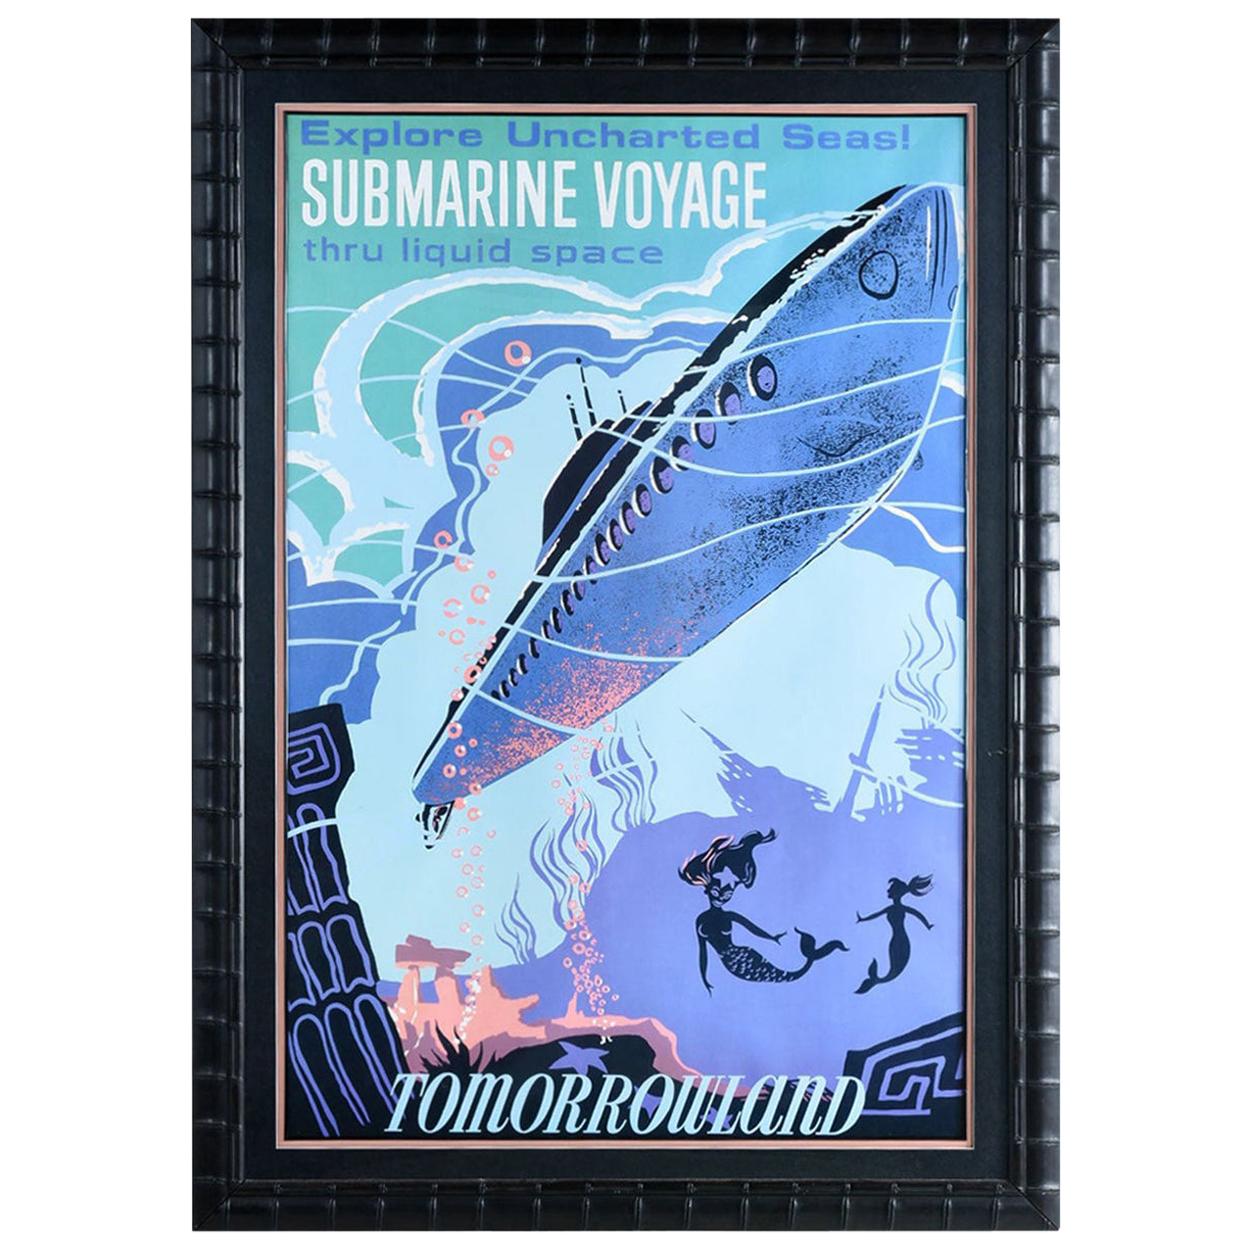 Massive Framed Disney Tomorrowland Submarine Voyage and Mermaid Poster